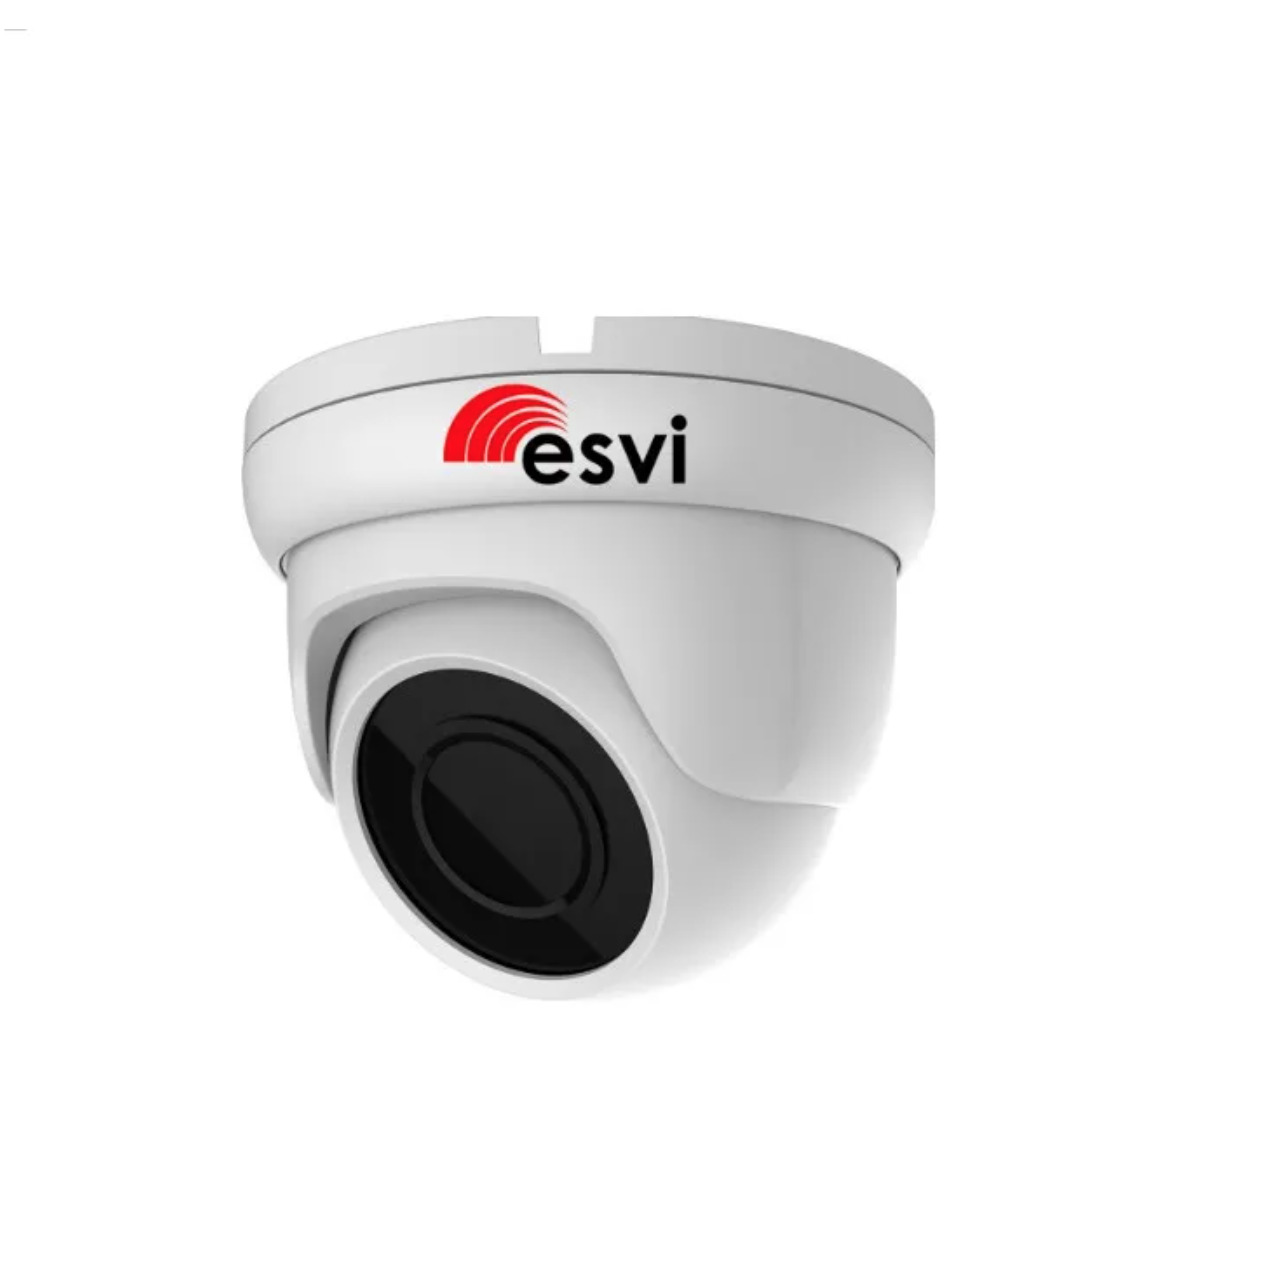 Купить камеру в туле. ESVI AHD уличная 3 в 1 видеокамера, 2.0МП*30к/с, f=2.8мм. Amatek AC-hdv201 (3.6). Видеокамера купольная уличная EVL-DB-h22f упаковка. ESVI EVC-DB-f22-p/a (3.6)(BV).